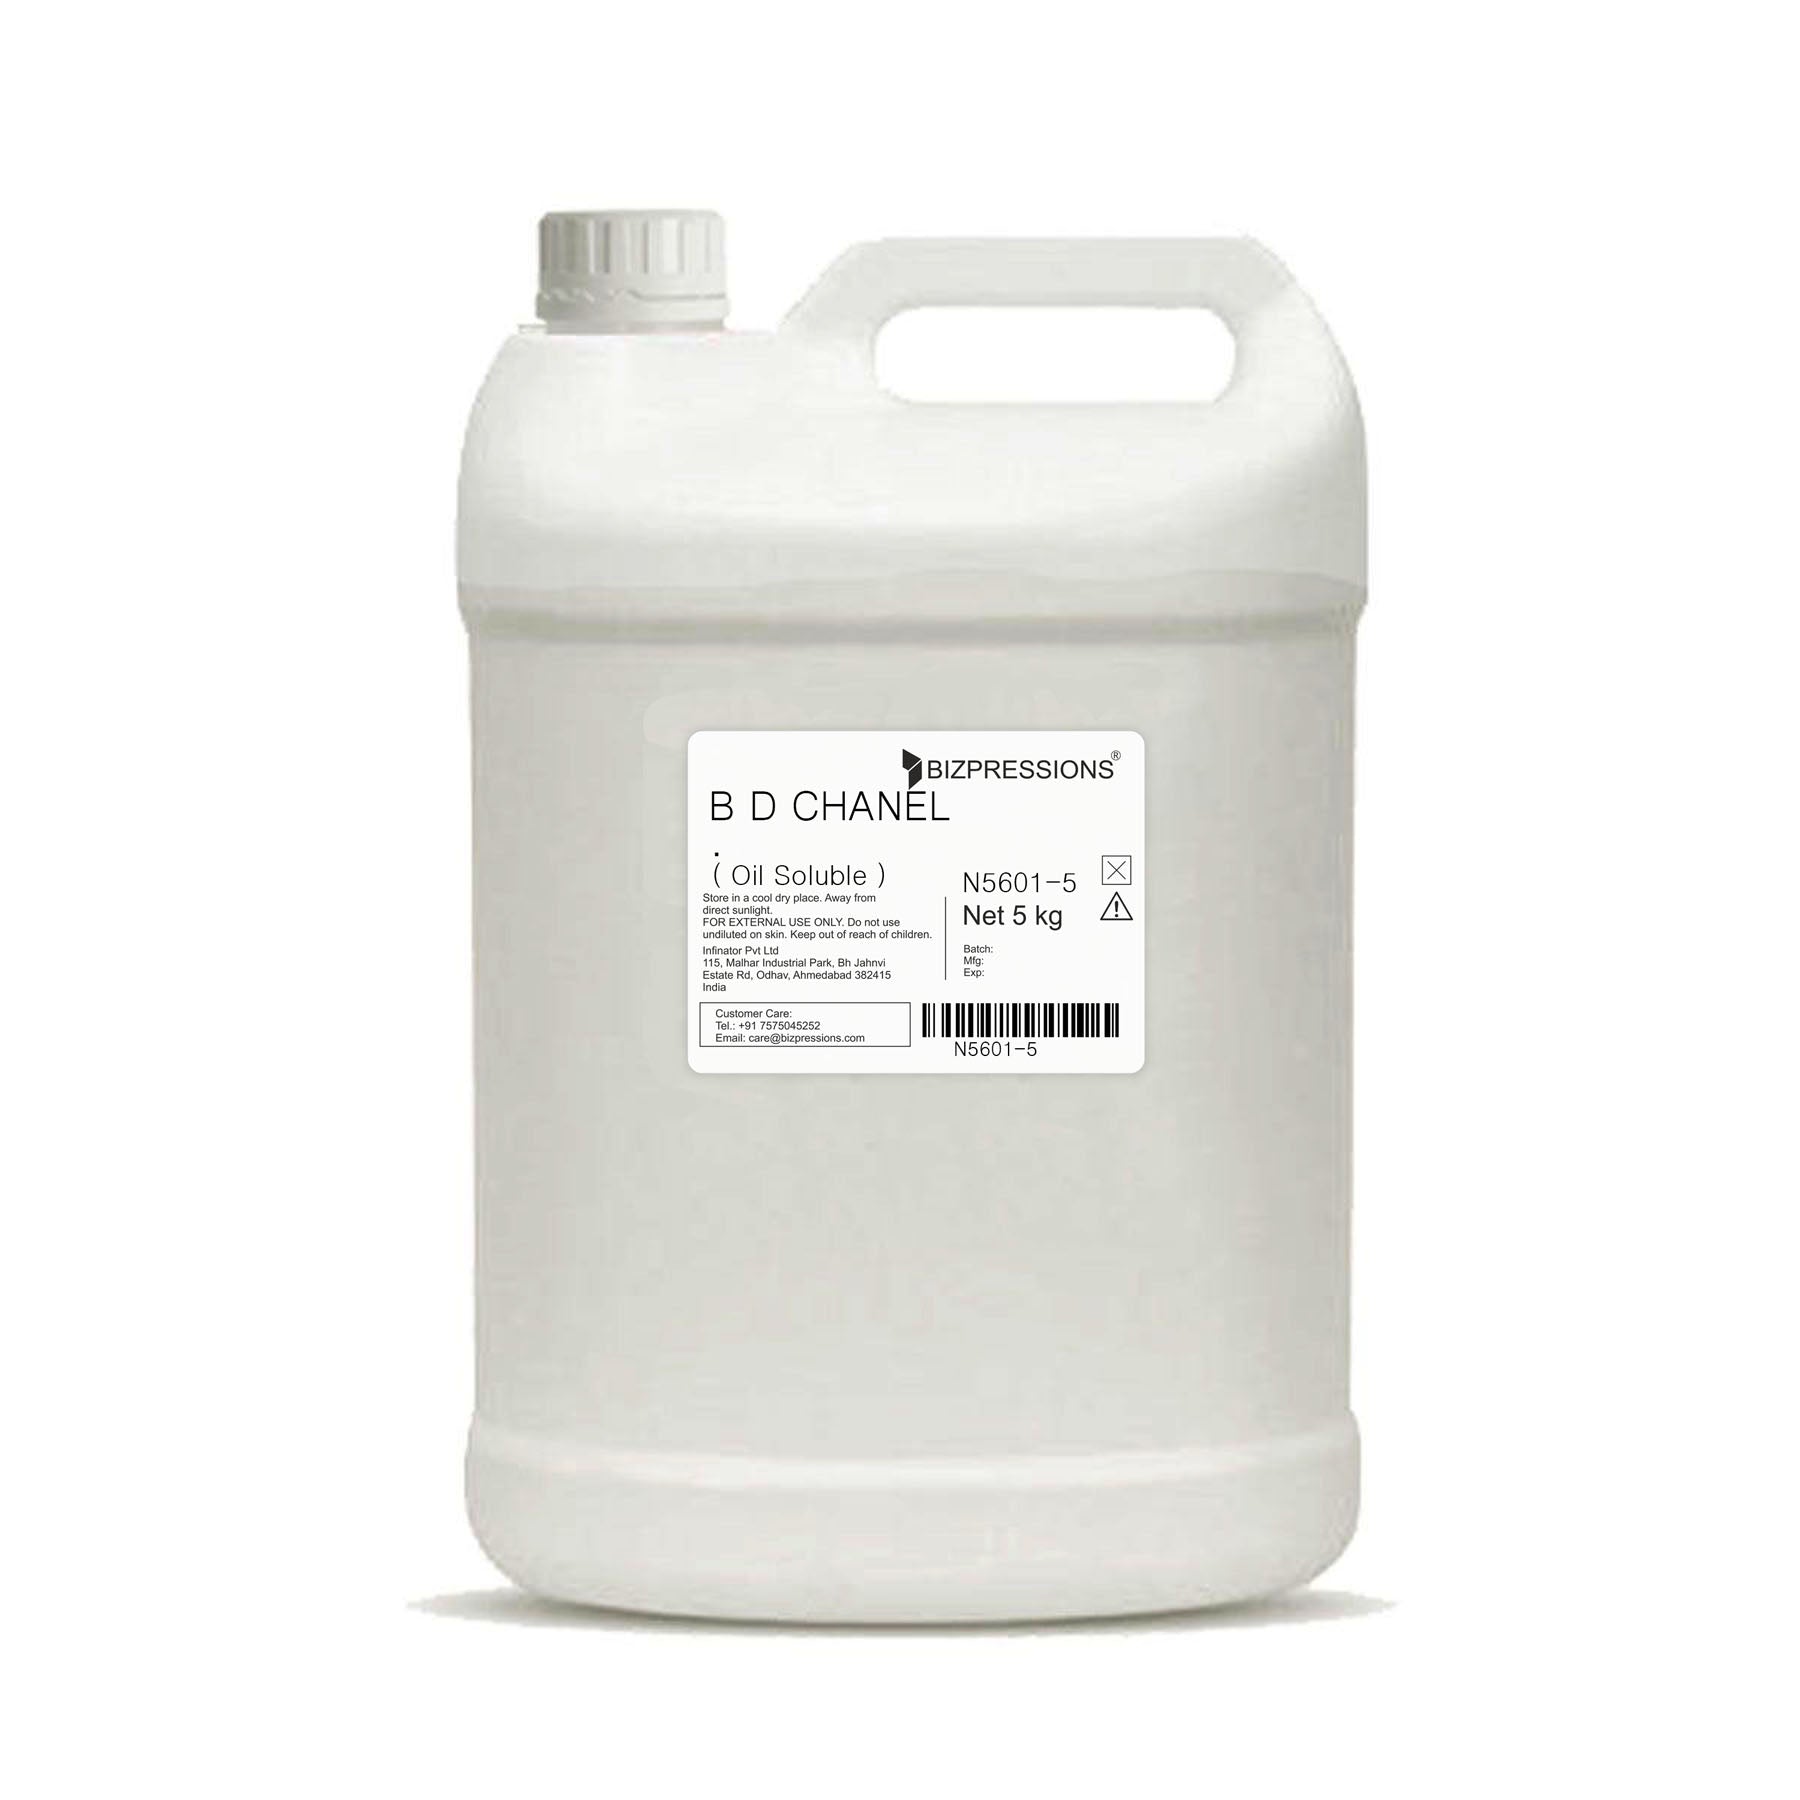 B D CHANEL - Fragrance ( Oil Soluble ) - 5 kg